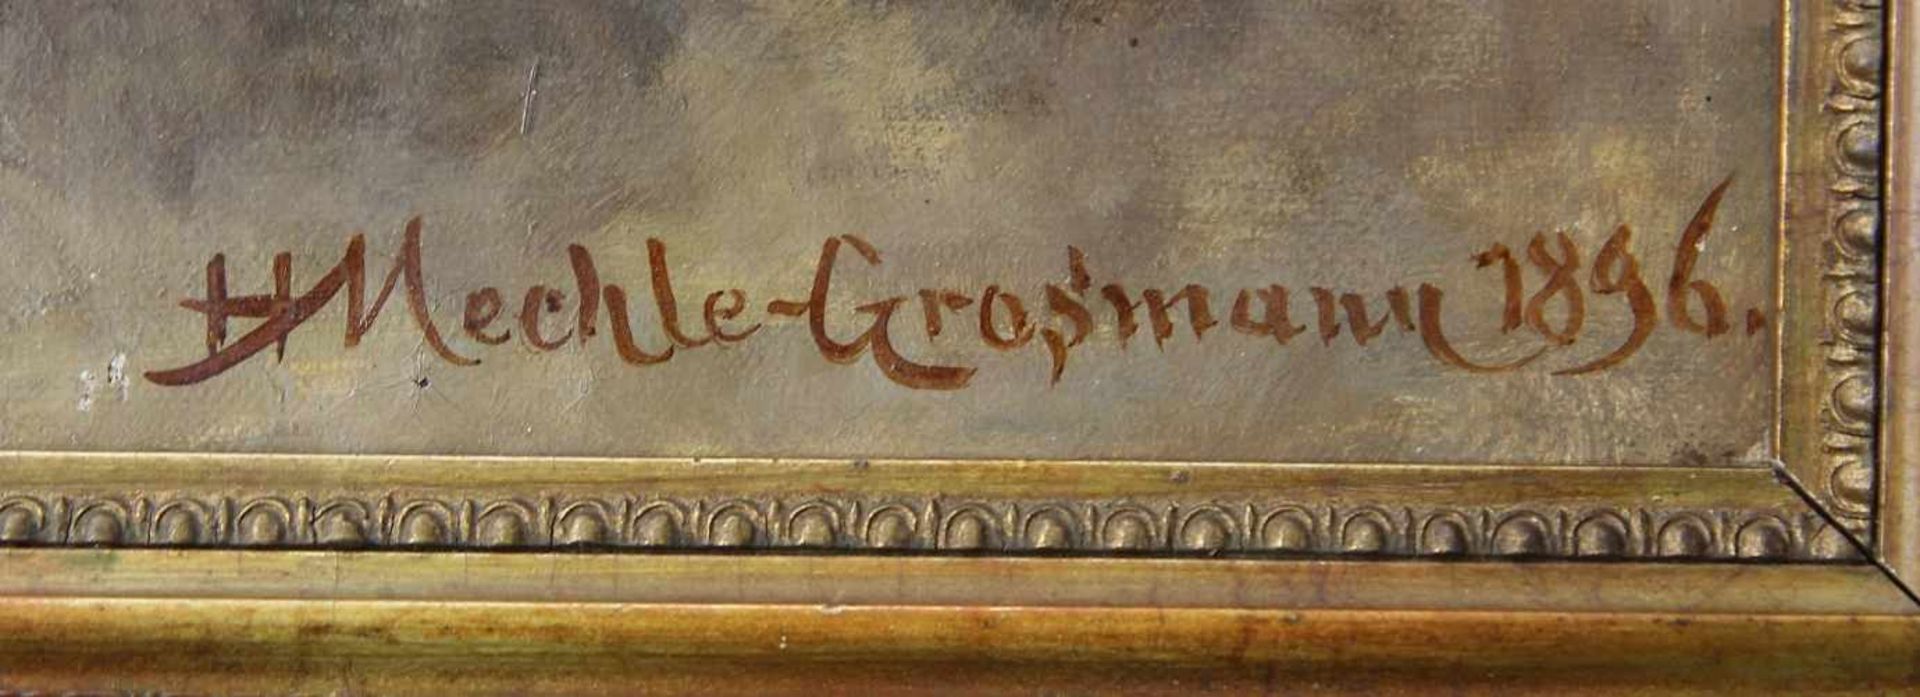 Mechle - Grossmann, Hedwig (Görlitz 1857 - 1928 Ödenburg, heute Sopron /Ungarn) Gemälde, Öl auf - Bild 4 aus 4